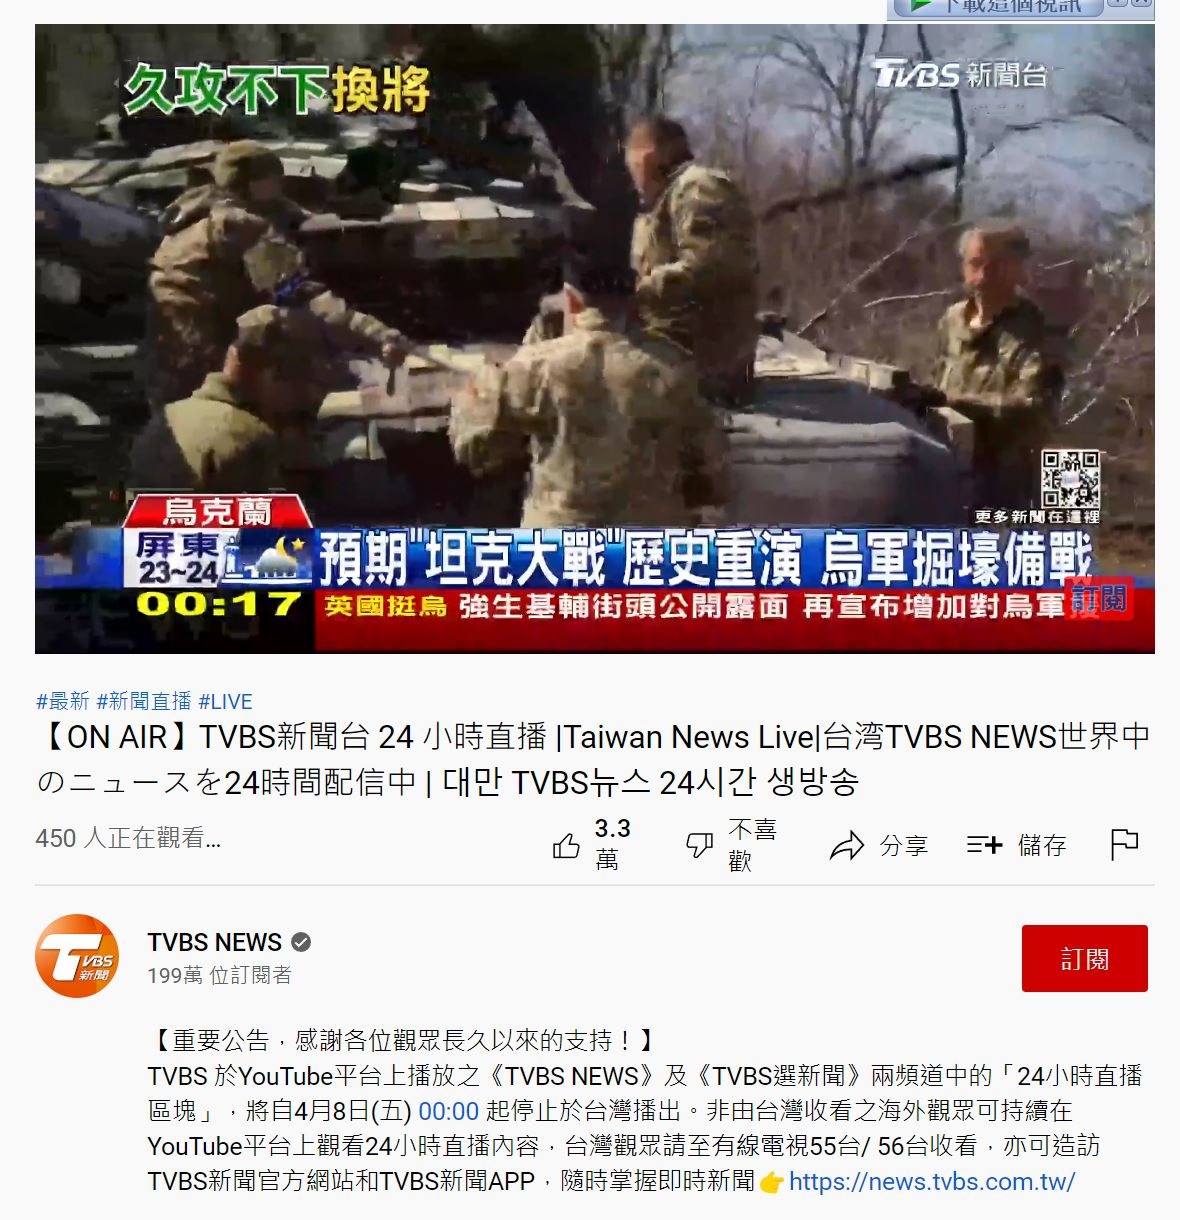 2022-04-11-00_17_51-【ON-AIR】TVBS 新聞台-24-小時直播-_Taiwan-News-Live_台湾 TVBS-NEWS 世界中のニュースを24 時間配信中-_-대만-TVBS뉴.jpg @3C 達人廖阿輝